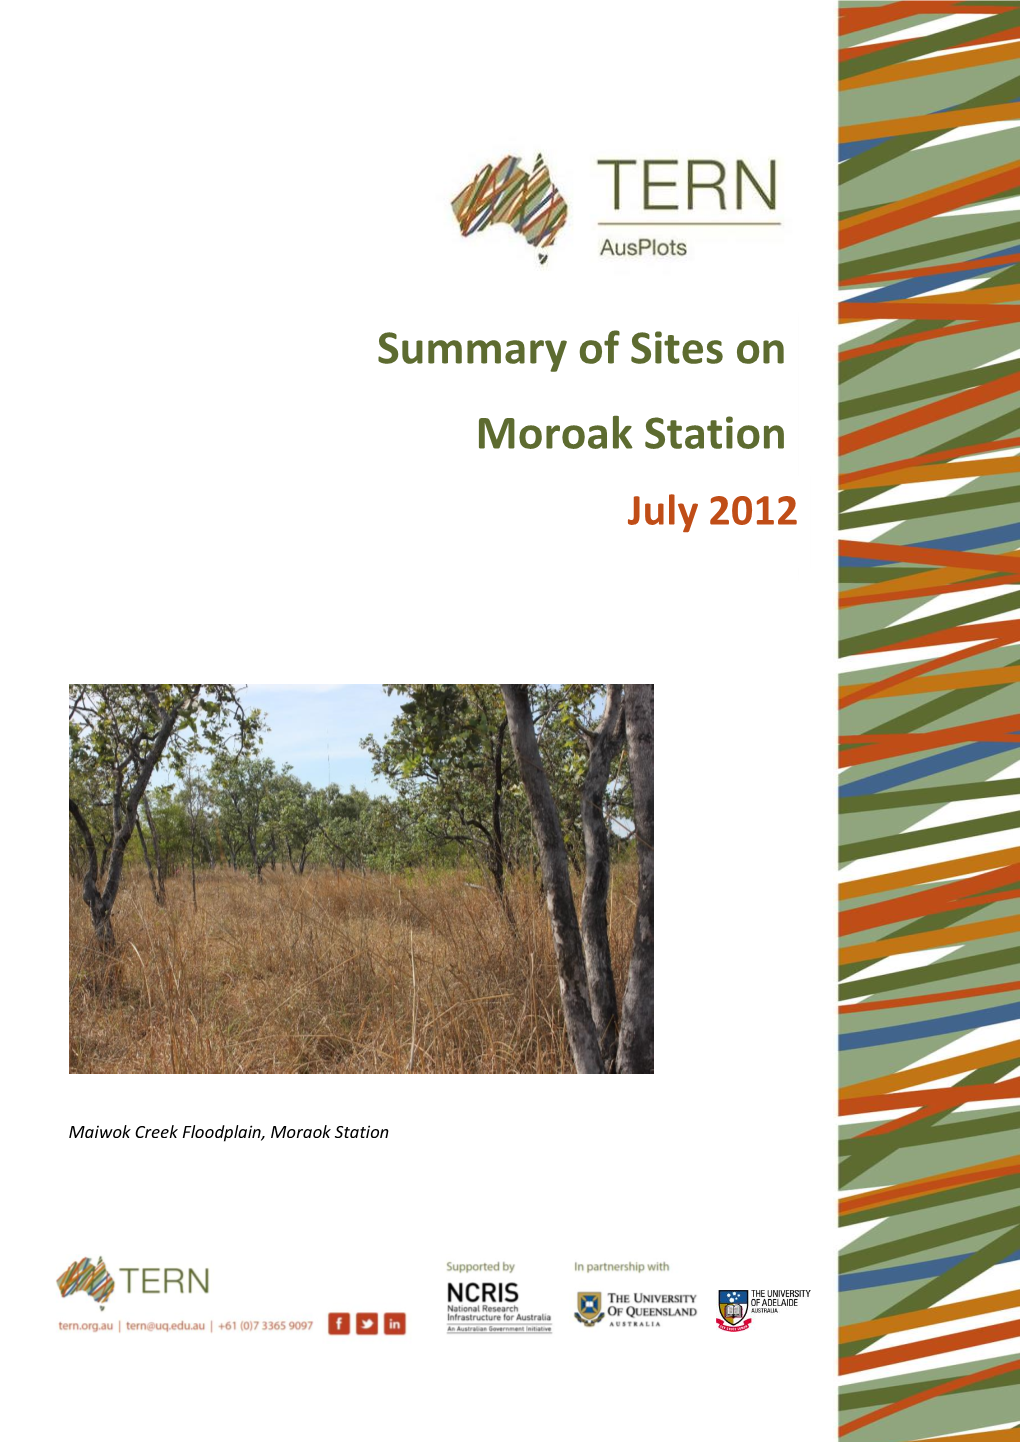 Summary of Sites on Moroak Station